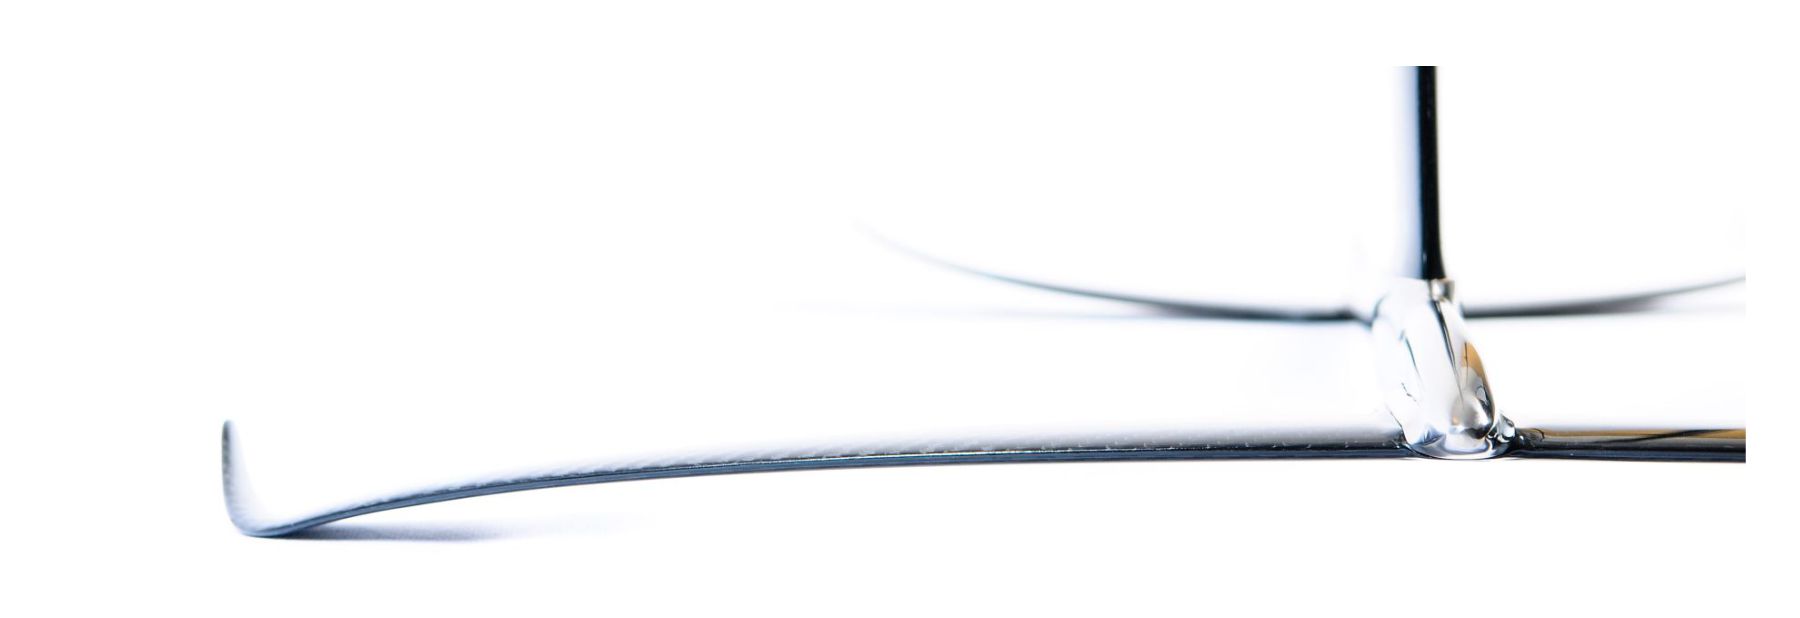 Kitefoil alpinefoil titanium